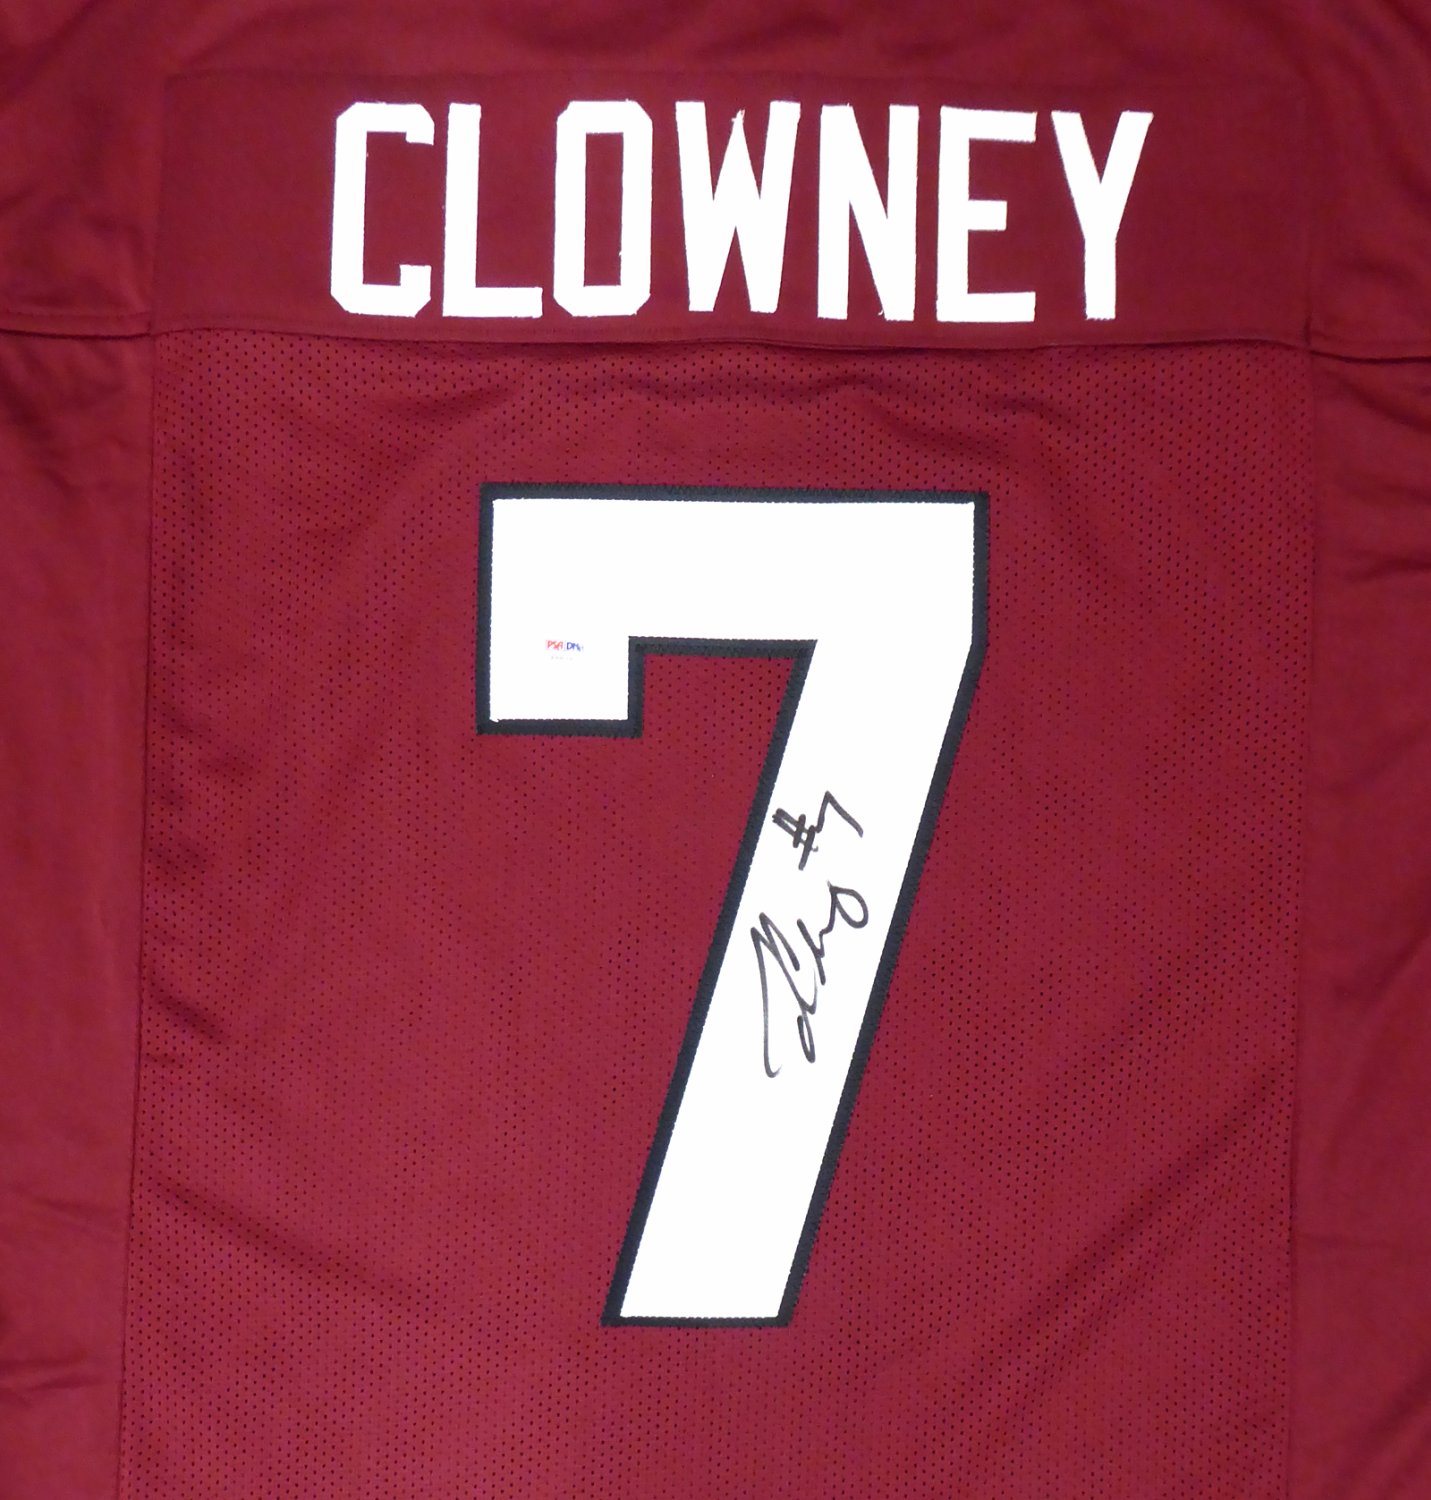 clowney gamecock jersey